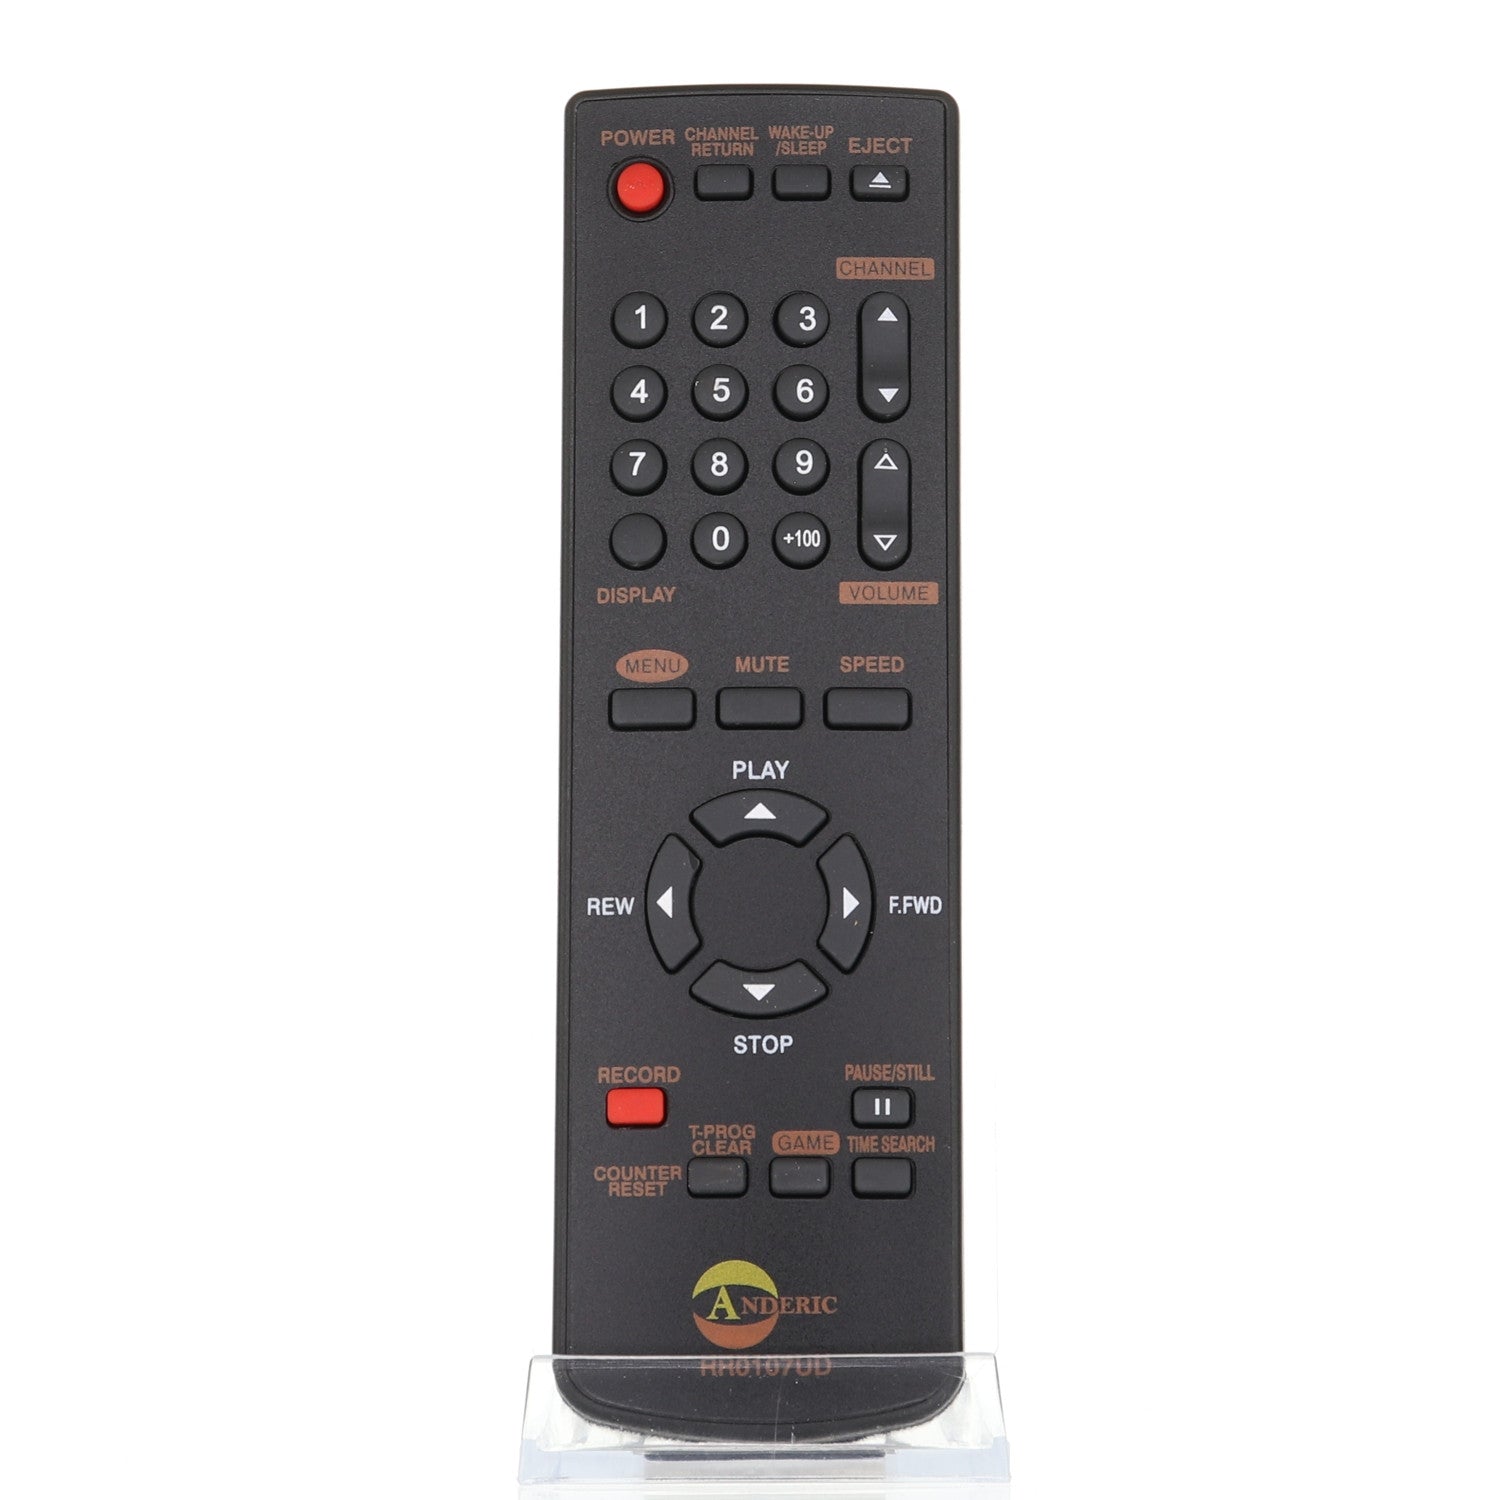 RR0107UD Remote Control for Funai®, Sylvania®, Symphonic®, Durabrand®, Emerson® TV/VCR Players